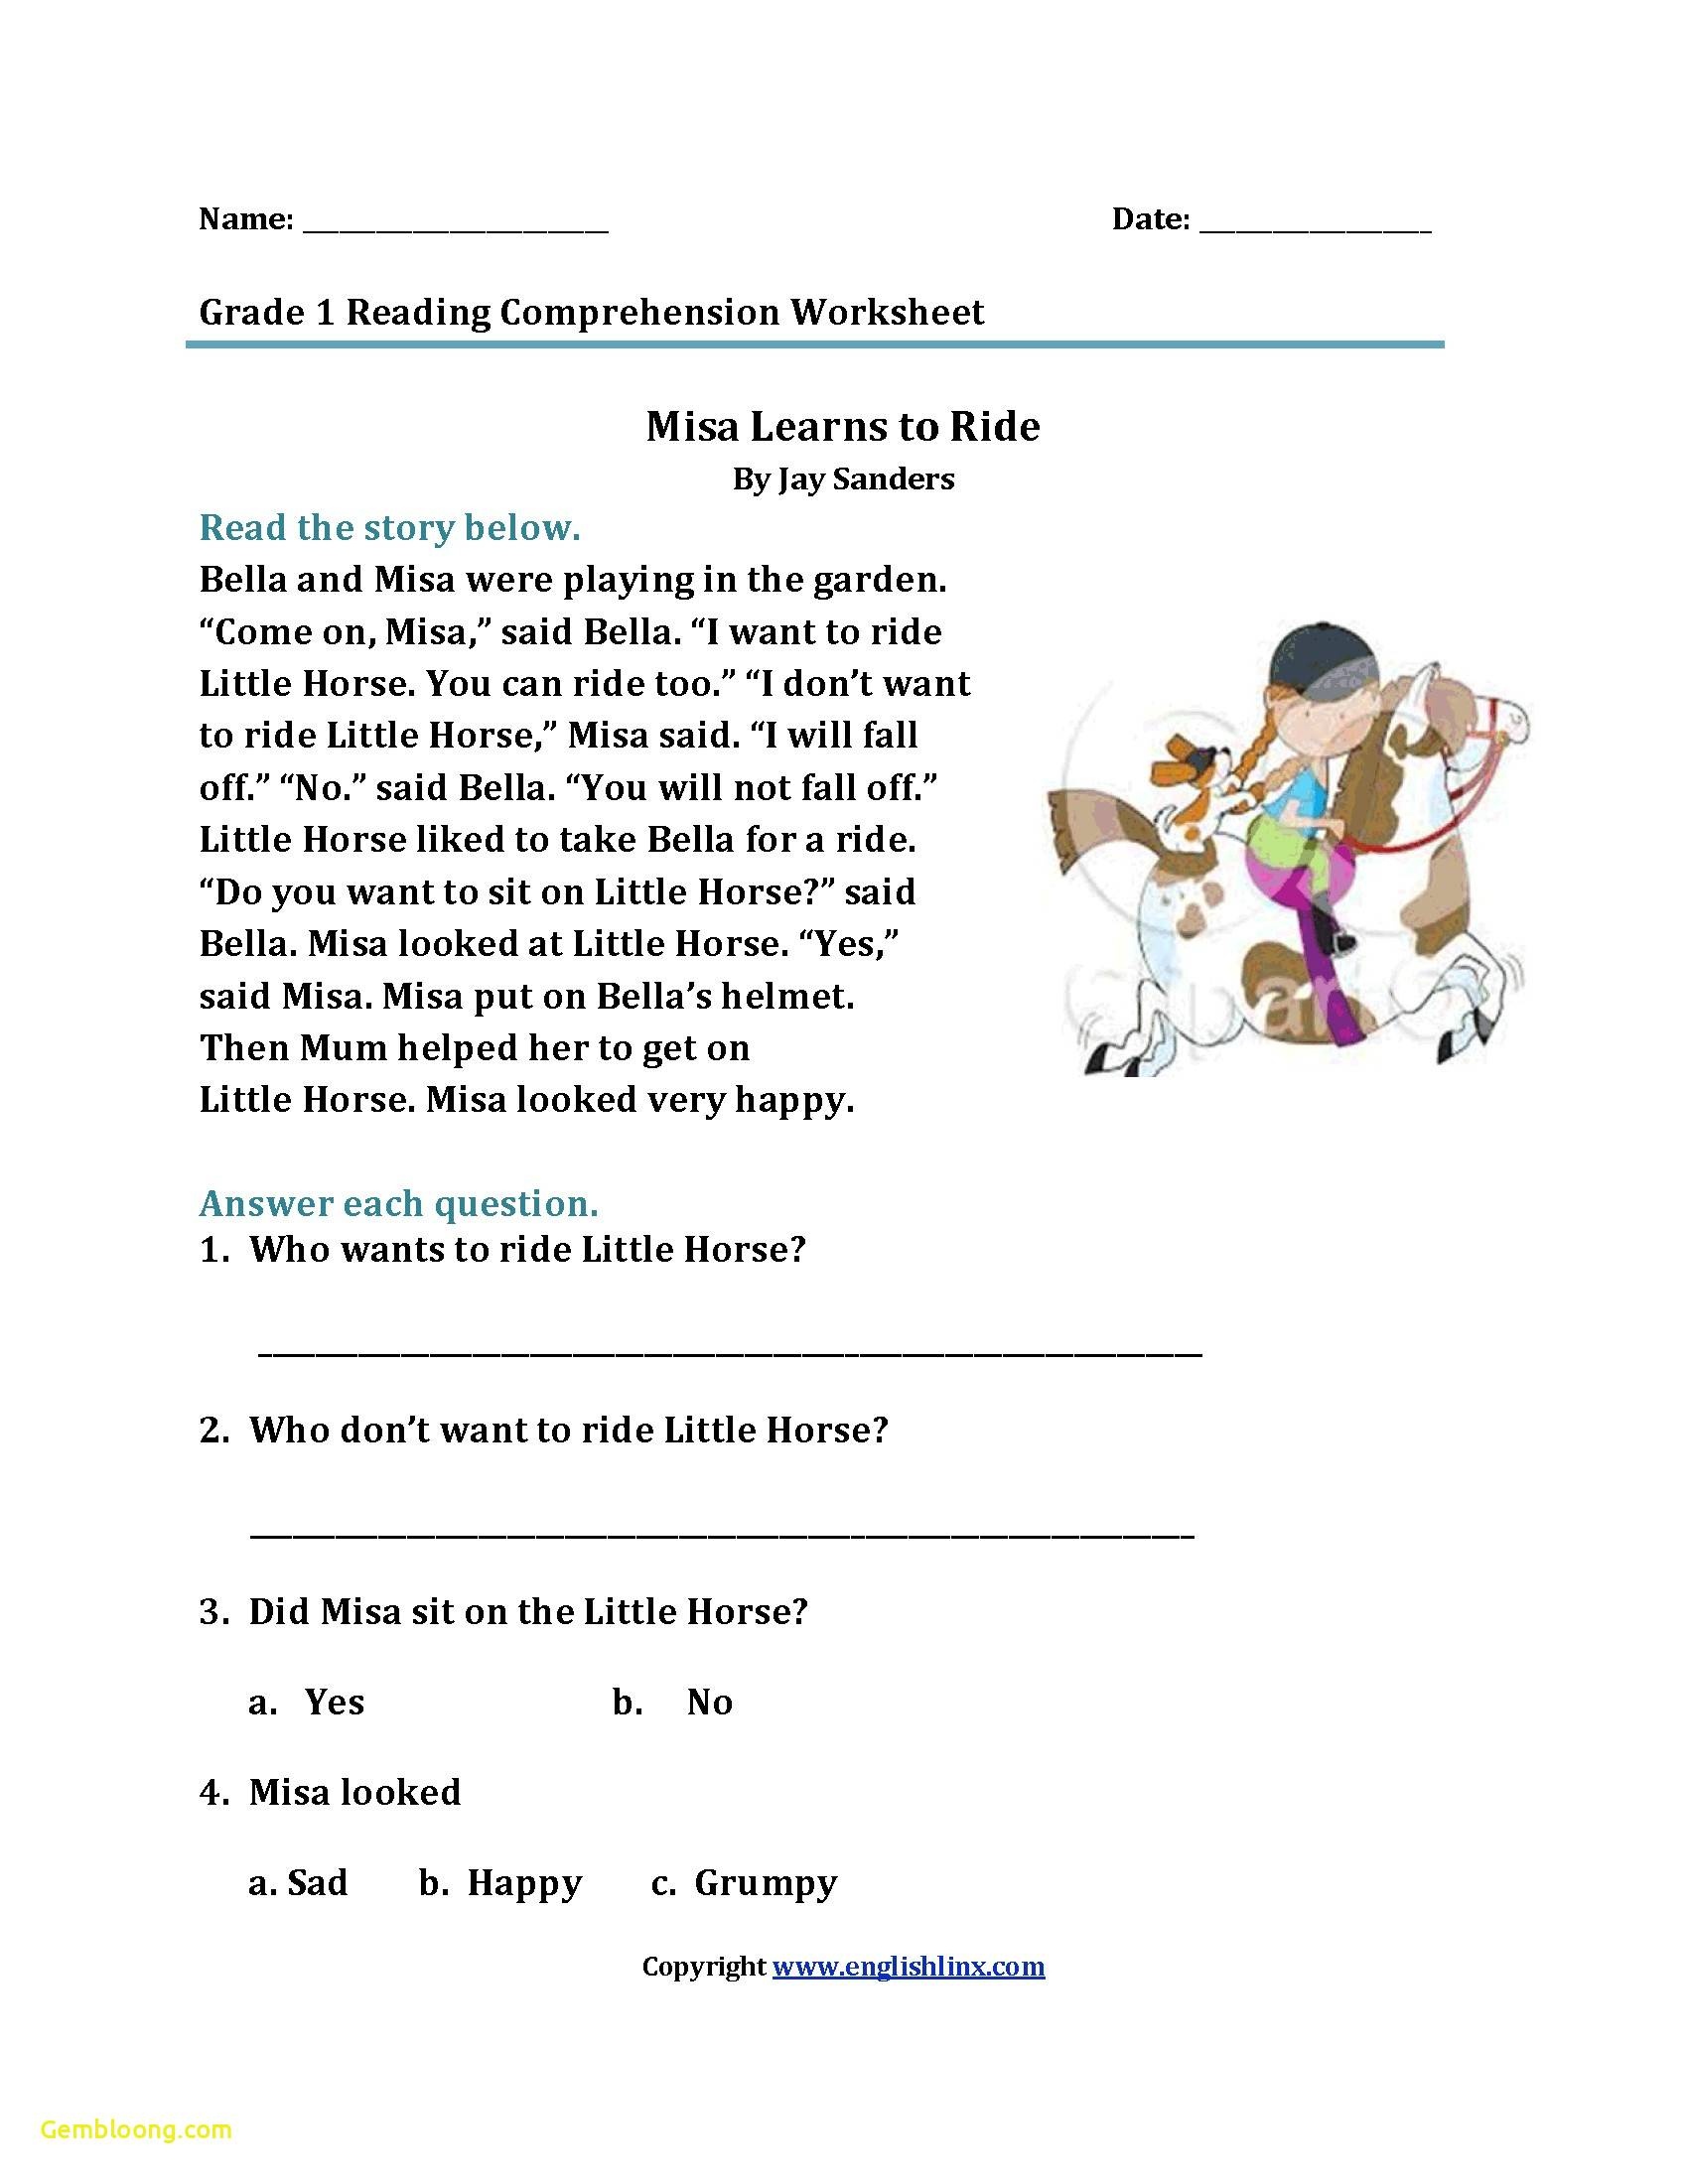 Reading Comprehension Worksheets For 1St Grade - Cramerforcongress - Free Printable Grade 1 Reading Comprehension Worksheets